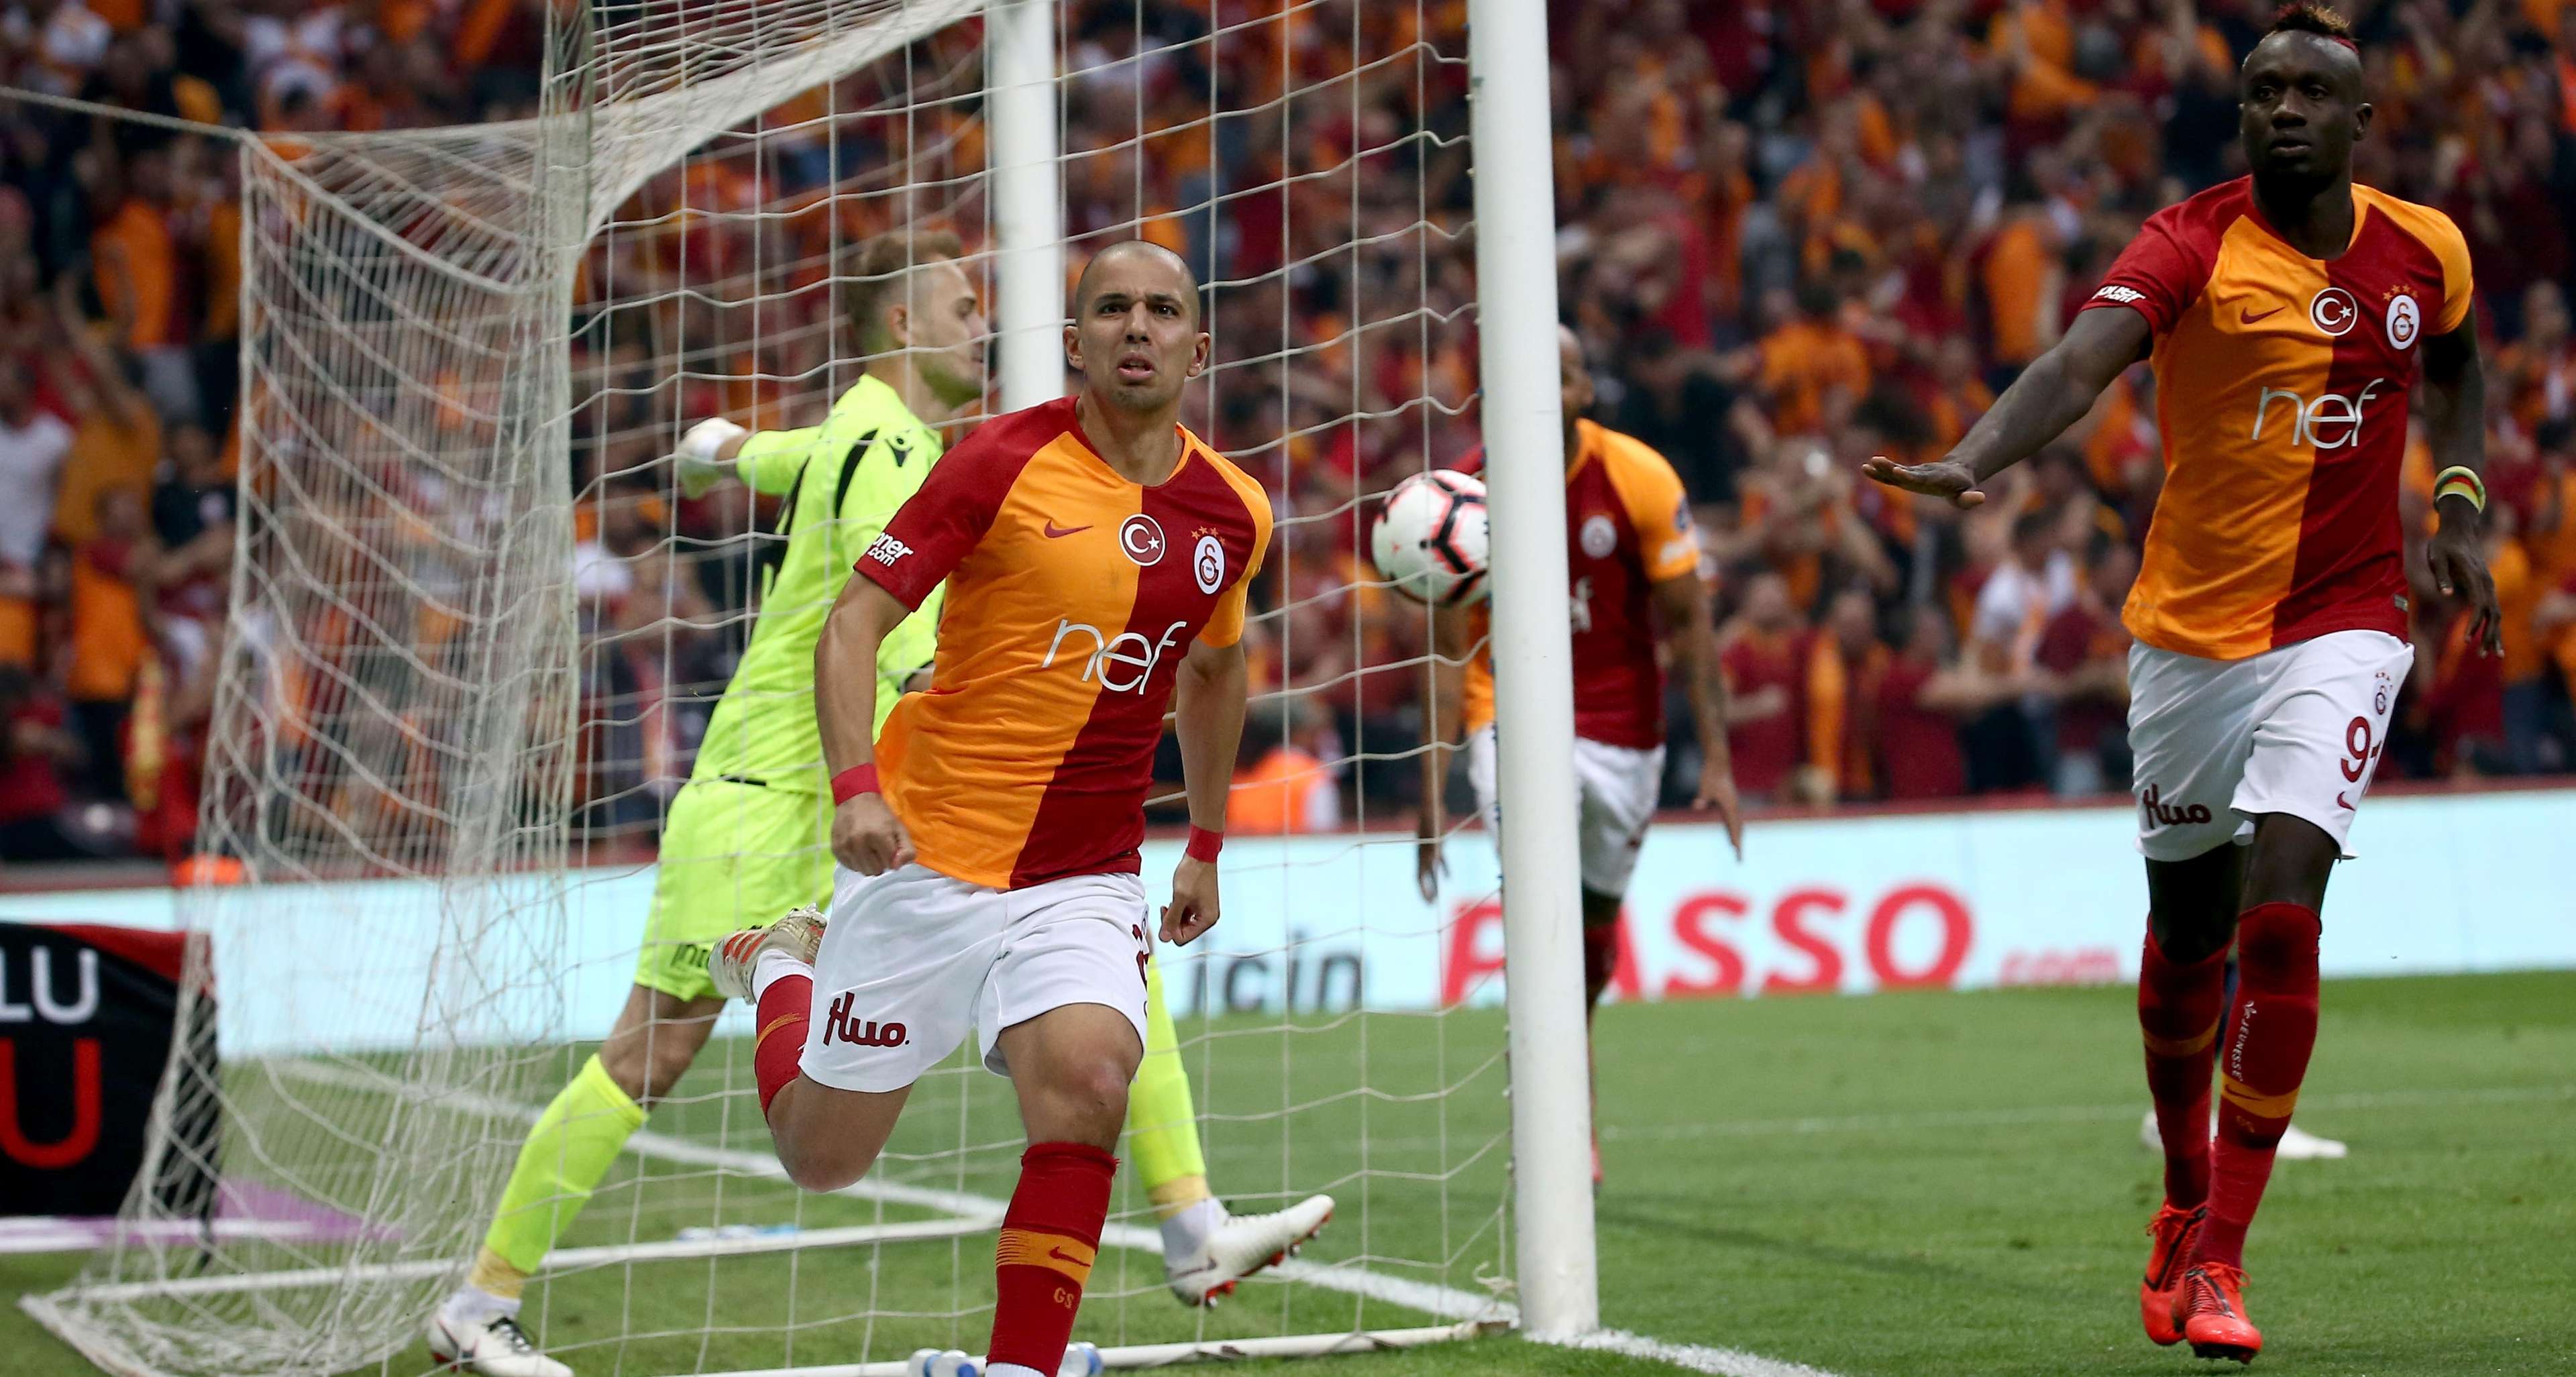 Sofiane Feghouli Galatasaray Basaksehir Turkish Super League 05/19/19